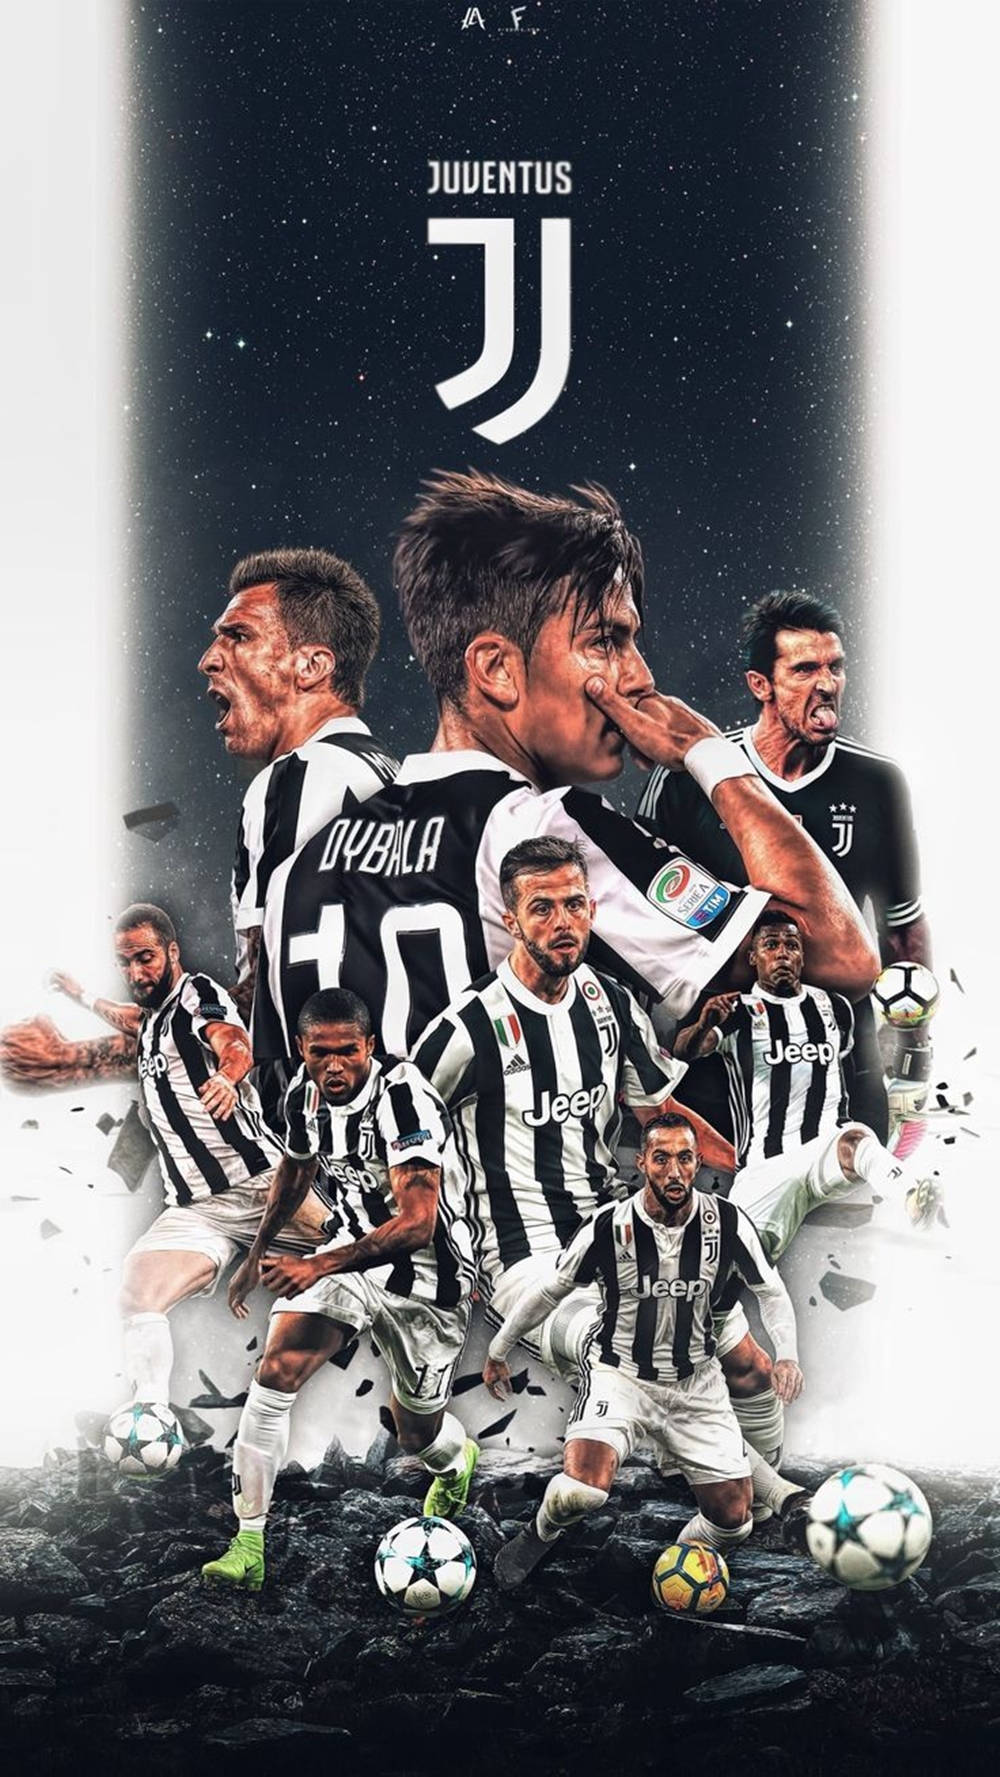 Juventus Fodboldklub Spillere Plakat Tapet: Vis de loyale spillere fra denne legendariske italienske fodboldklub. Wallpaper